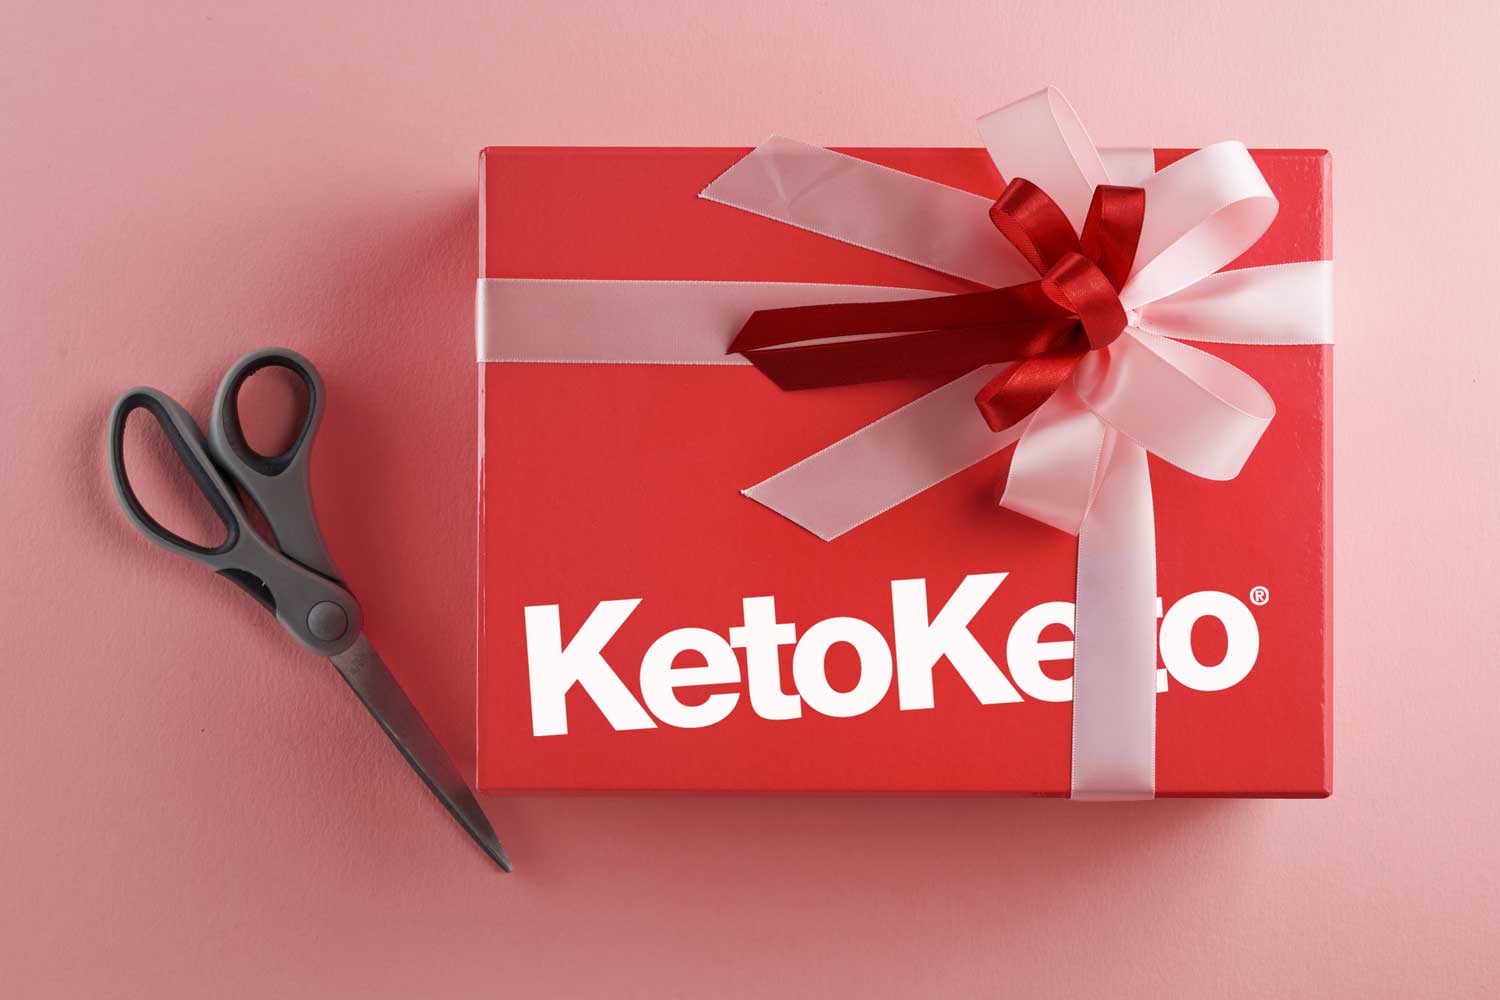 The Ultimate Keto Christmas Gift Guide - 50+ Keto Gifts